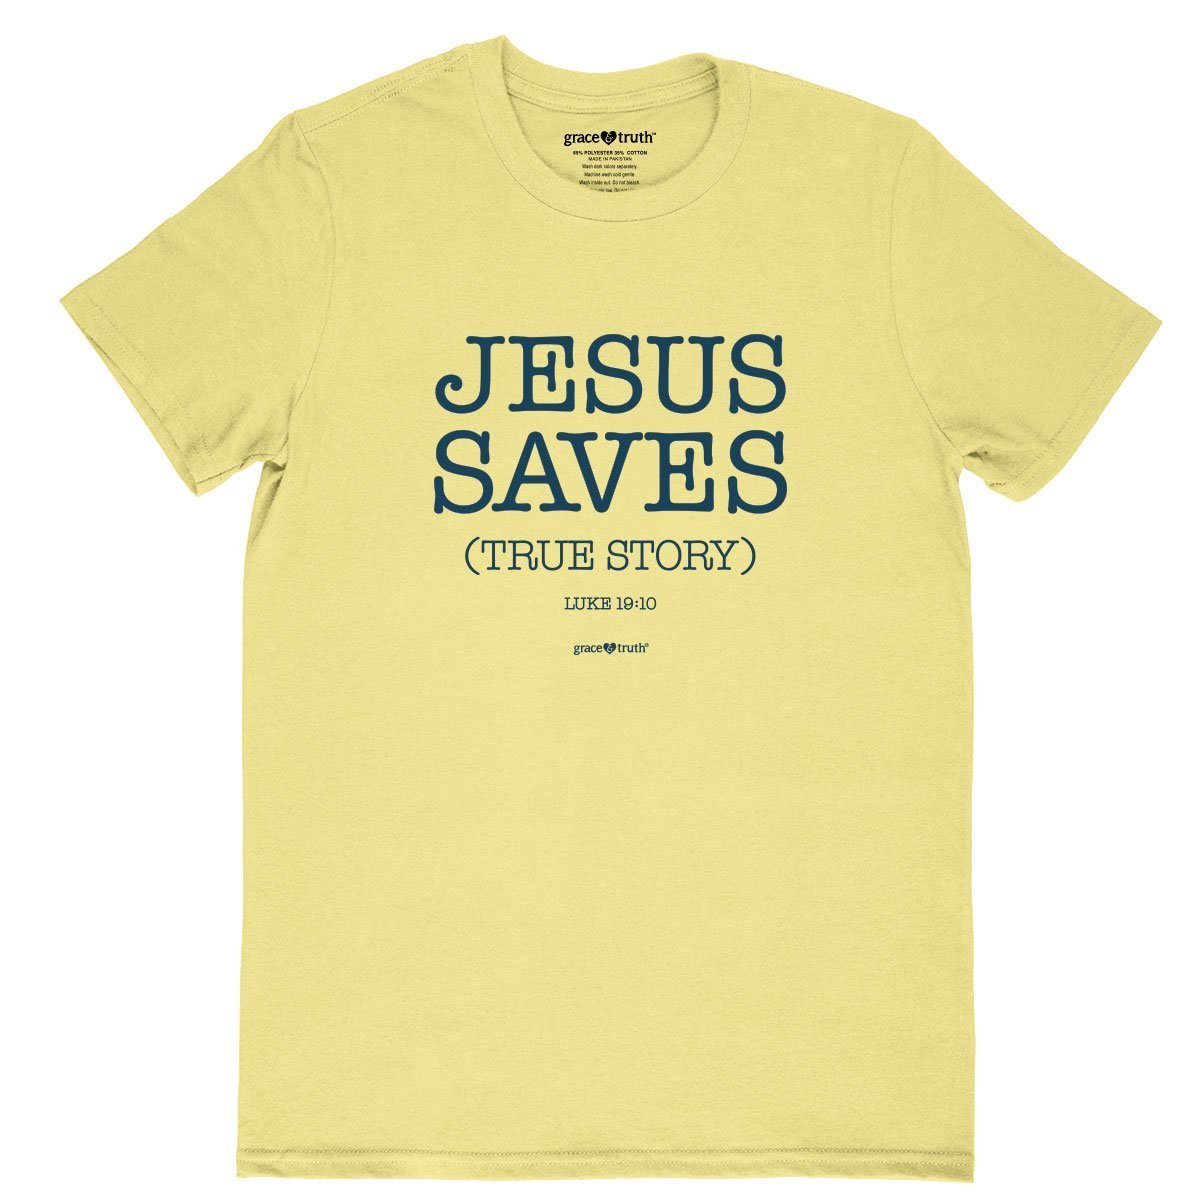 Cherished Girl Grace & Truth Jesus Saves True Story Girlie Christian Bright T Shirt